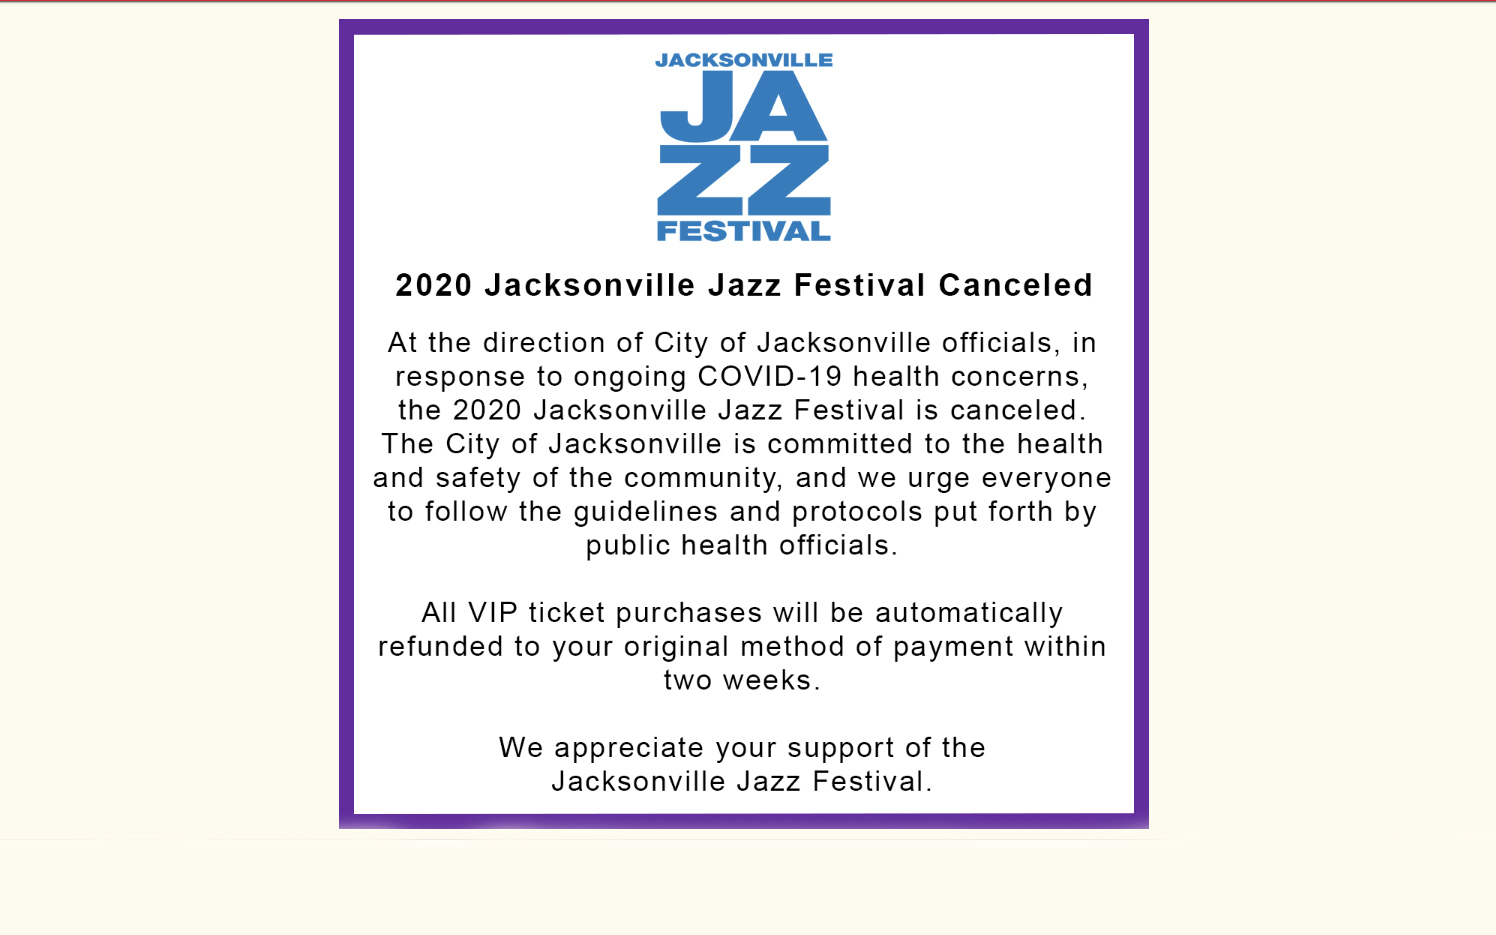 The notification on the Jacksonville Jazz Festival website.